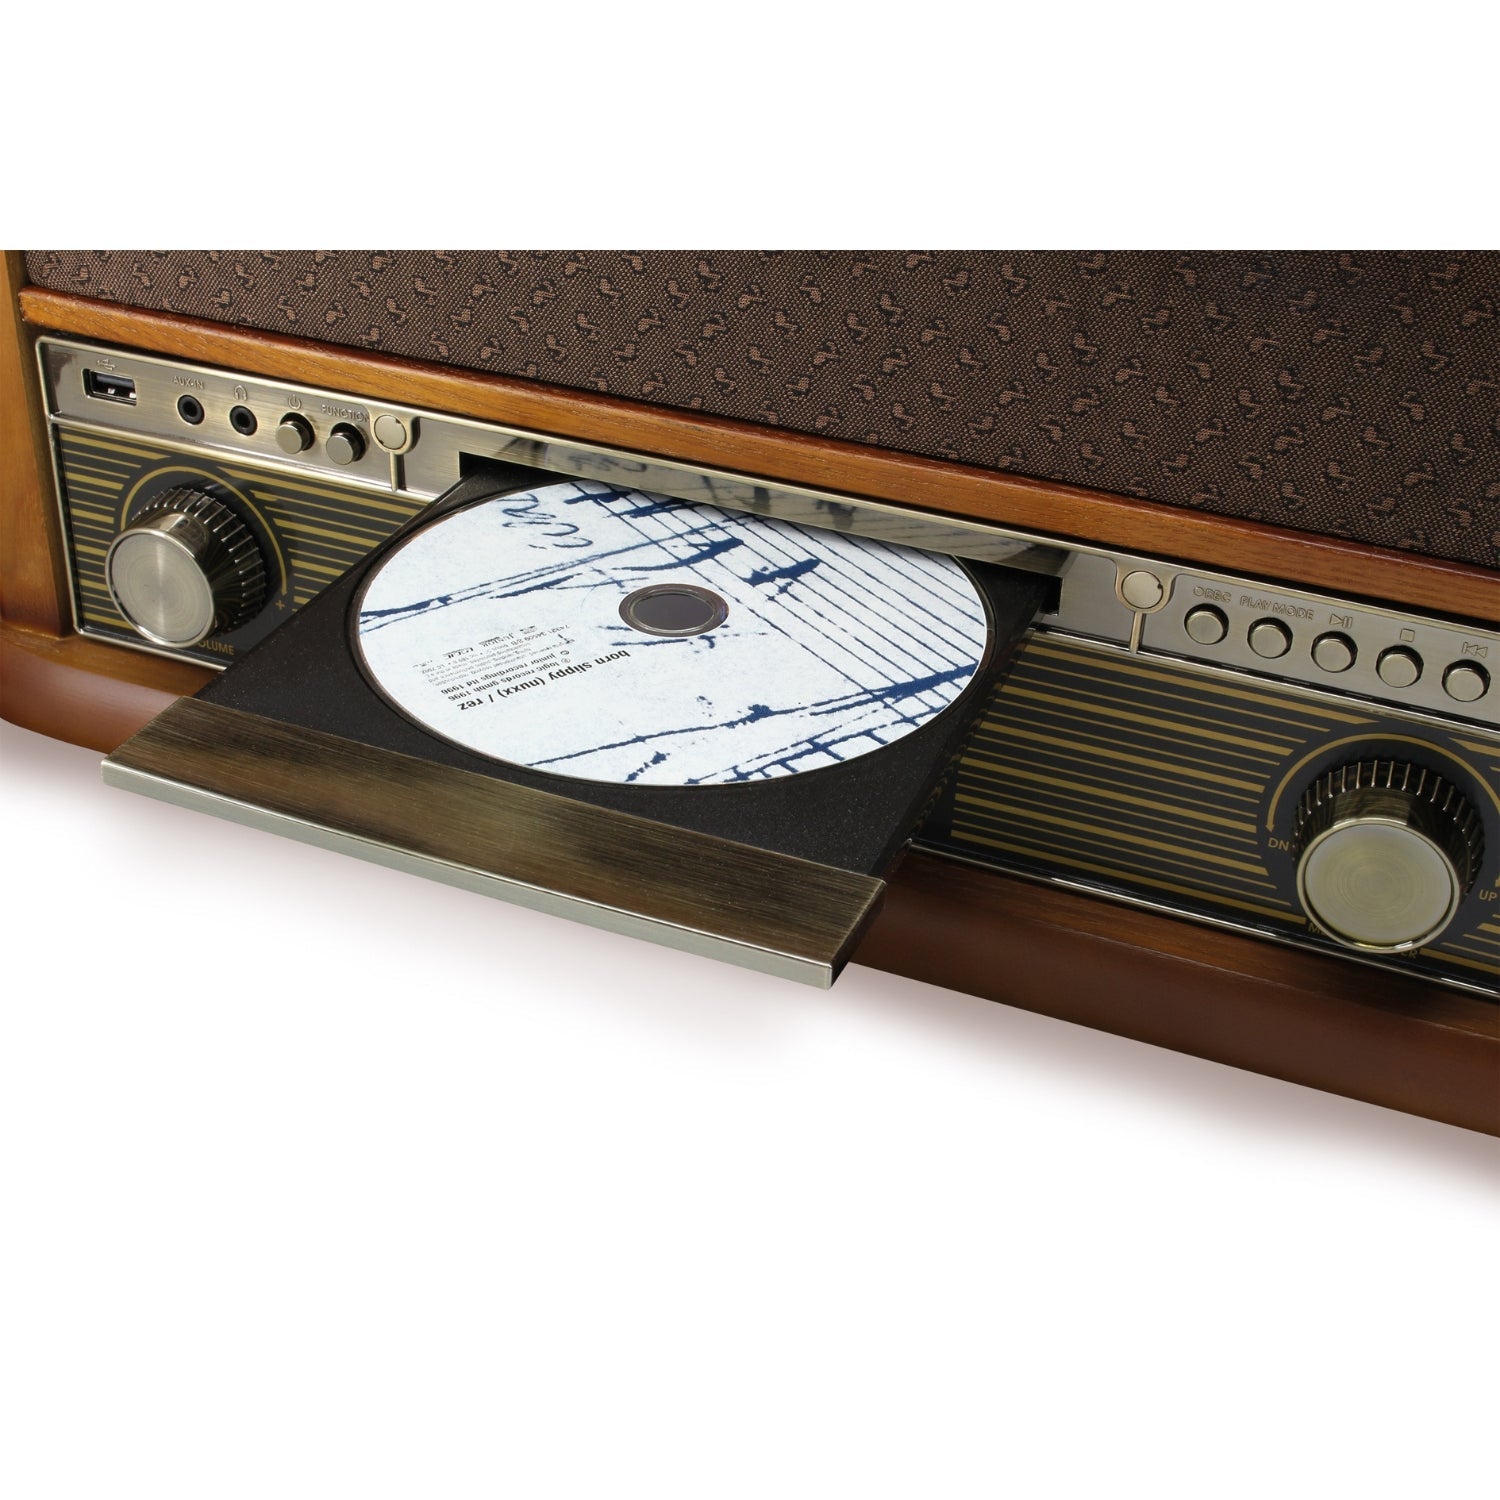 Soundmaster NR560 Retro Plattenspieler Kompaktanlage CD-Player Kassettenspieler USB Bluetooth Encoding-Funktion